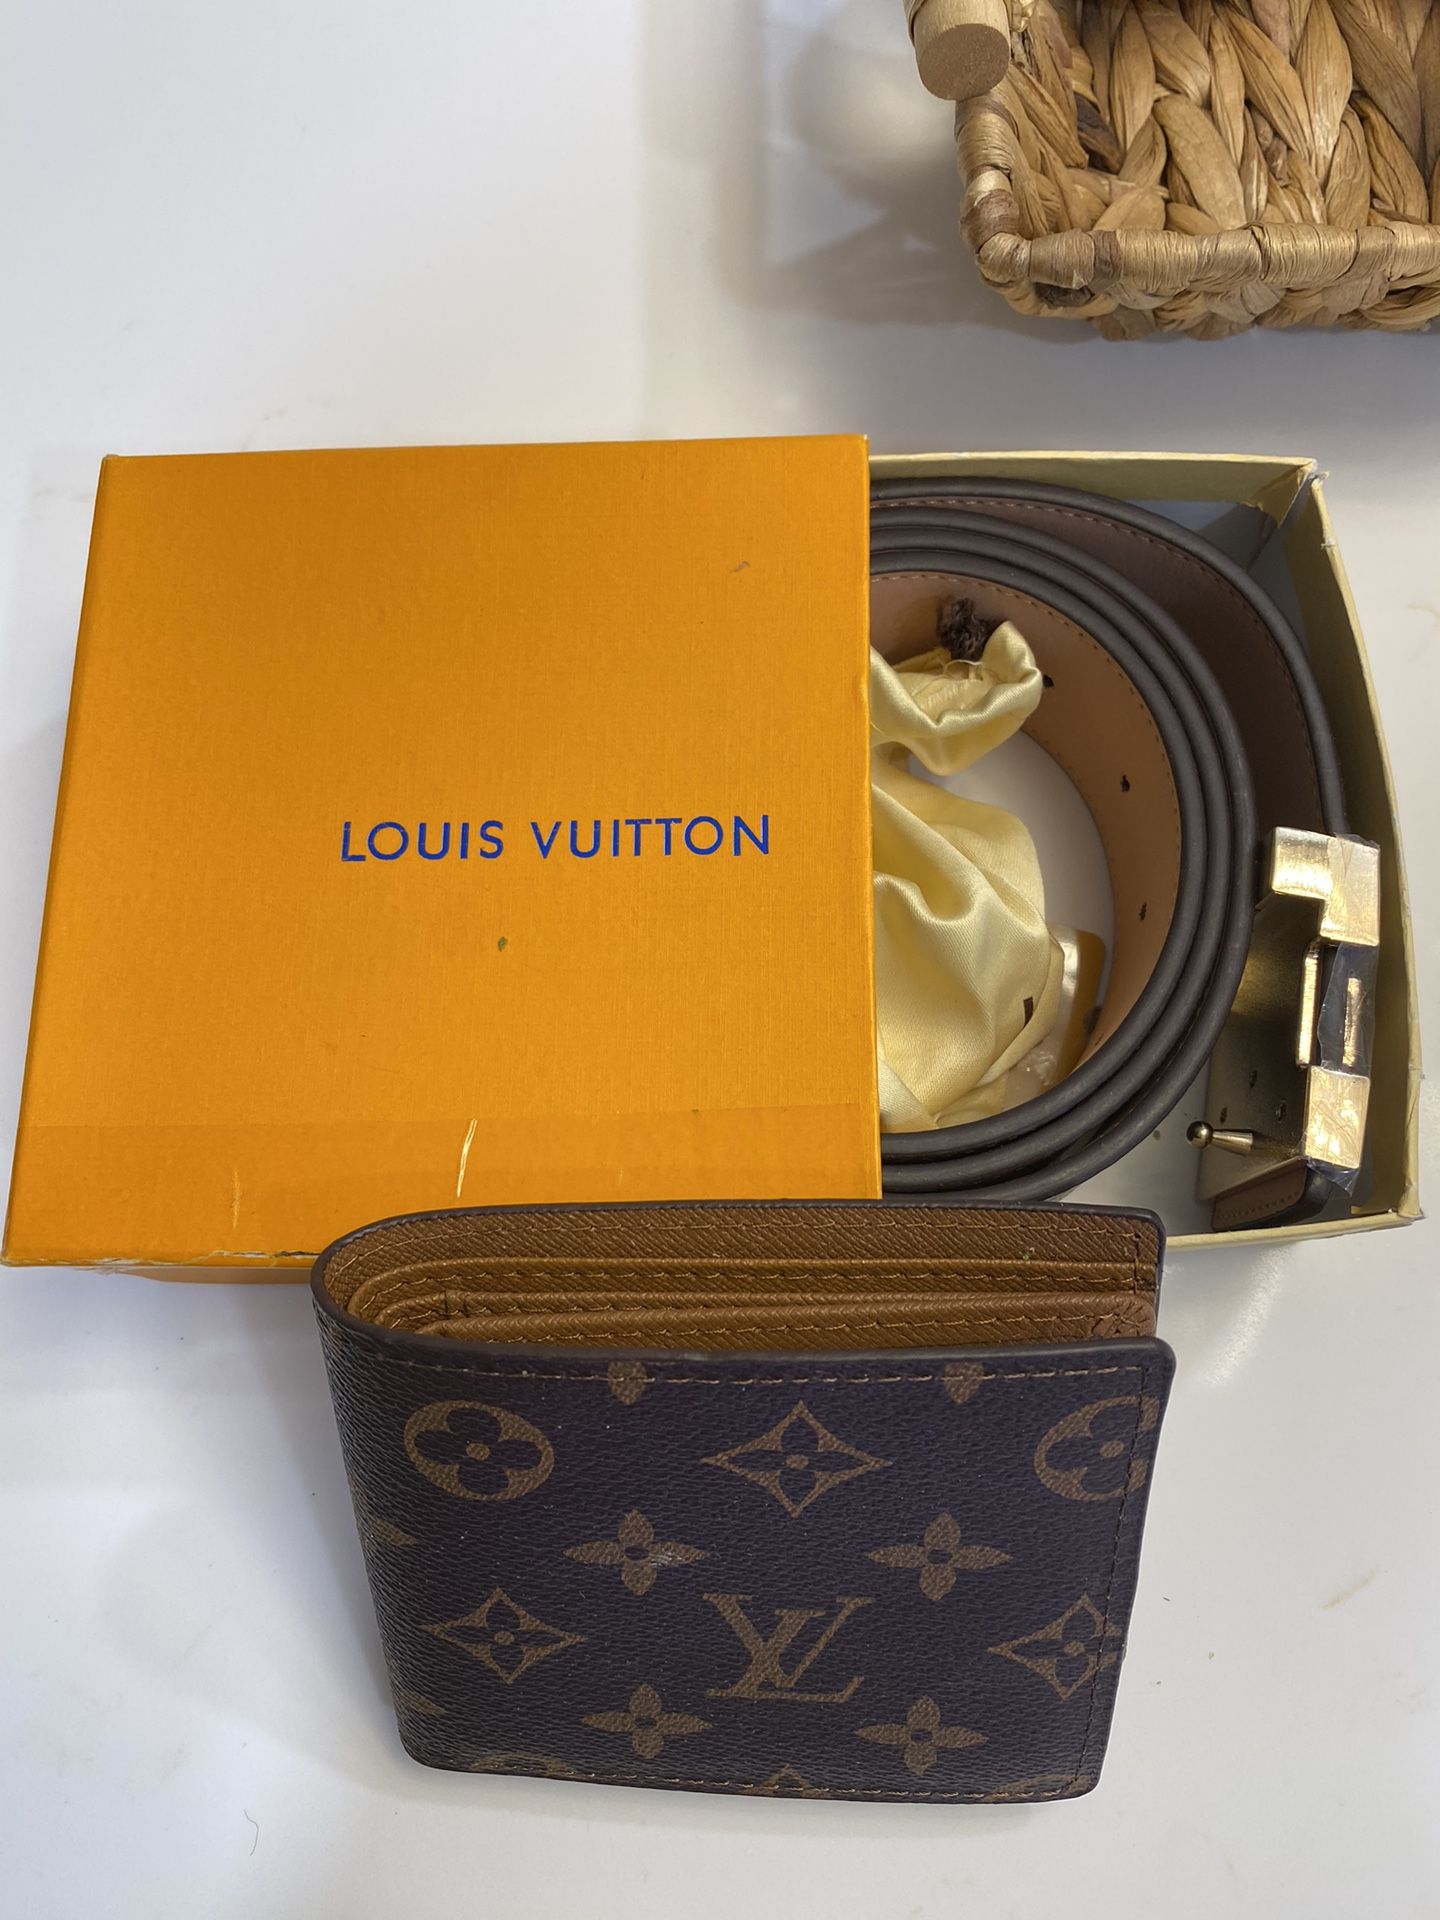 Louis Vuitton Belt  And Wallet 